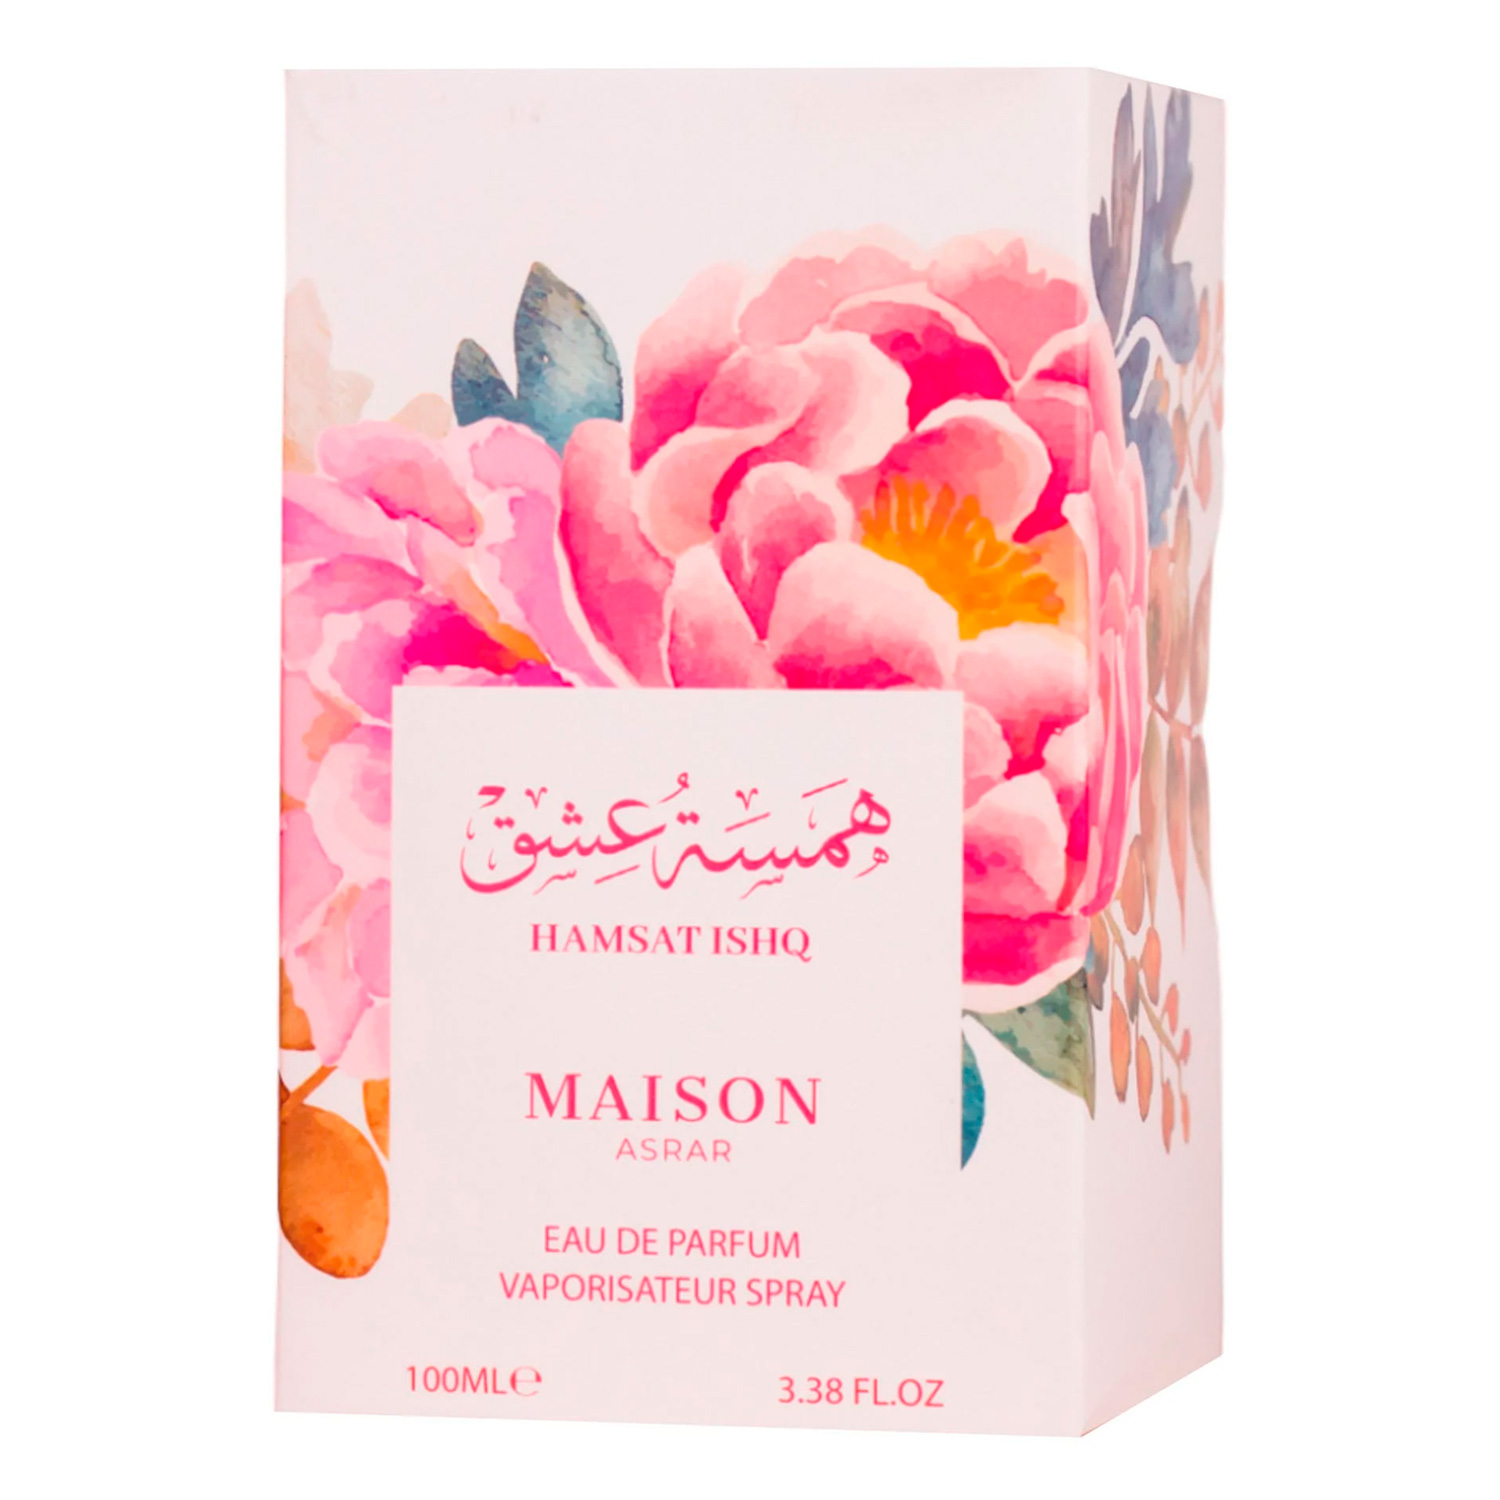 Perfume Maison Asrar Hamsat Ishq Eau de Parfum Feminino 100ml